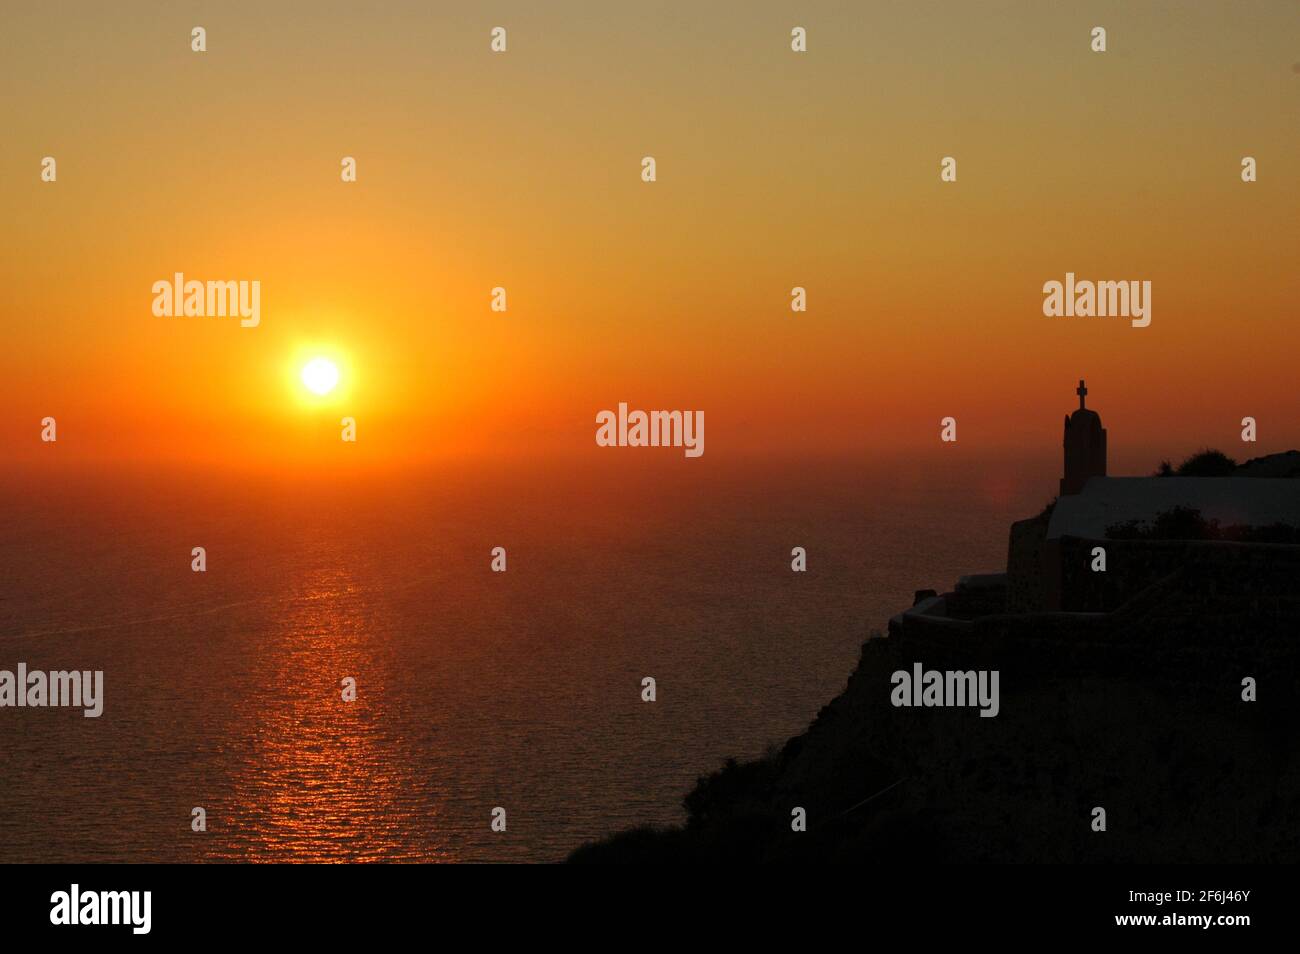 Sunset Over Oia On The Island Of Santorini In The Aegean Sea. Stock Photo